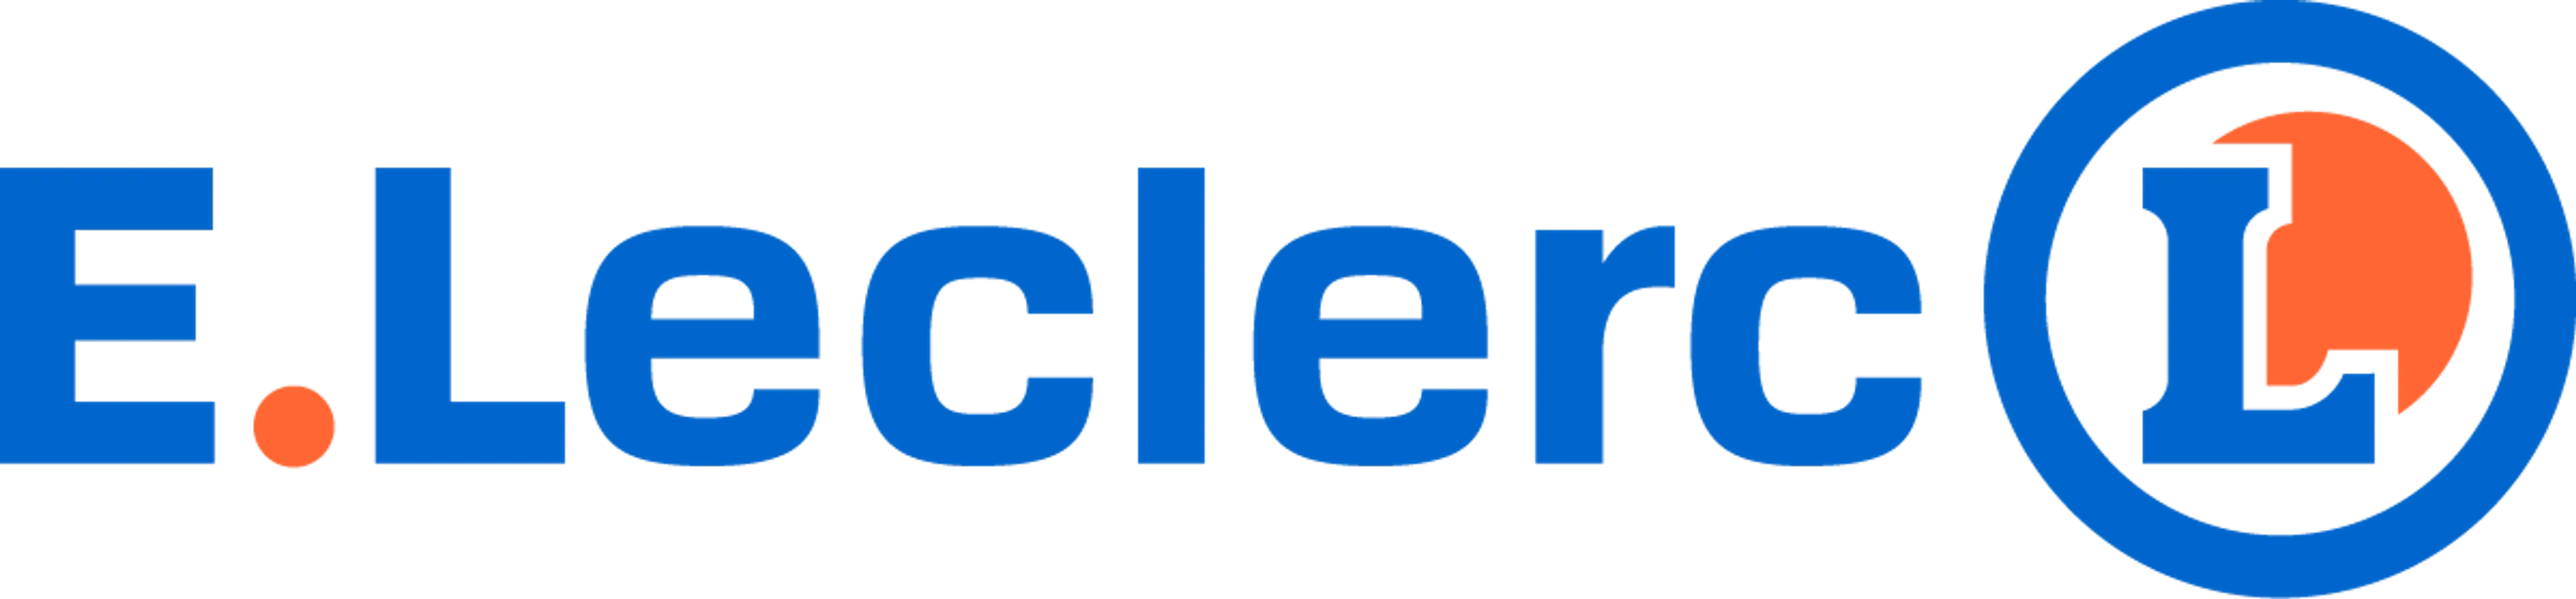 E.LECLERC logo